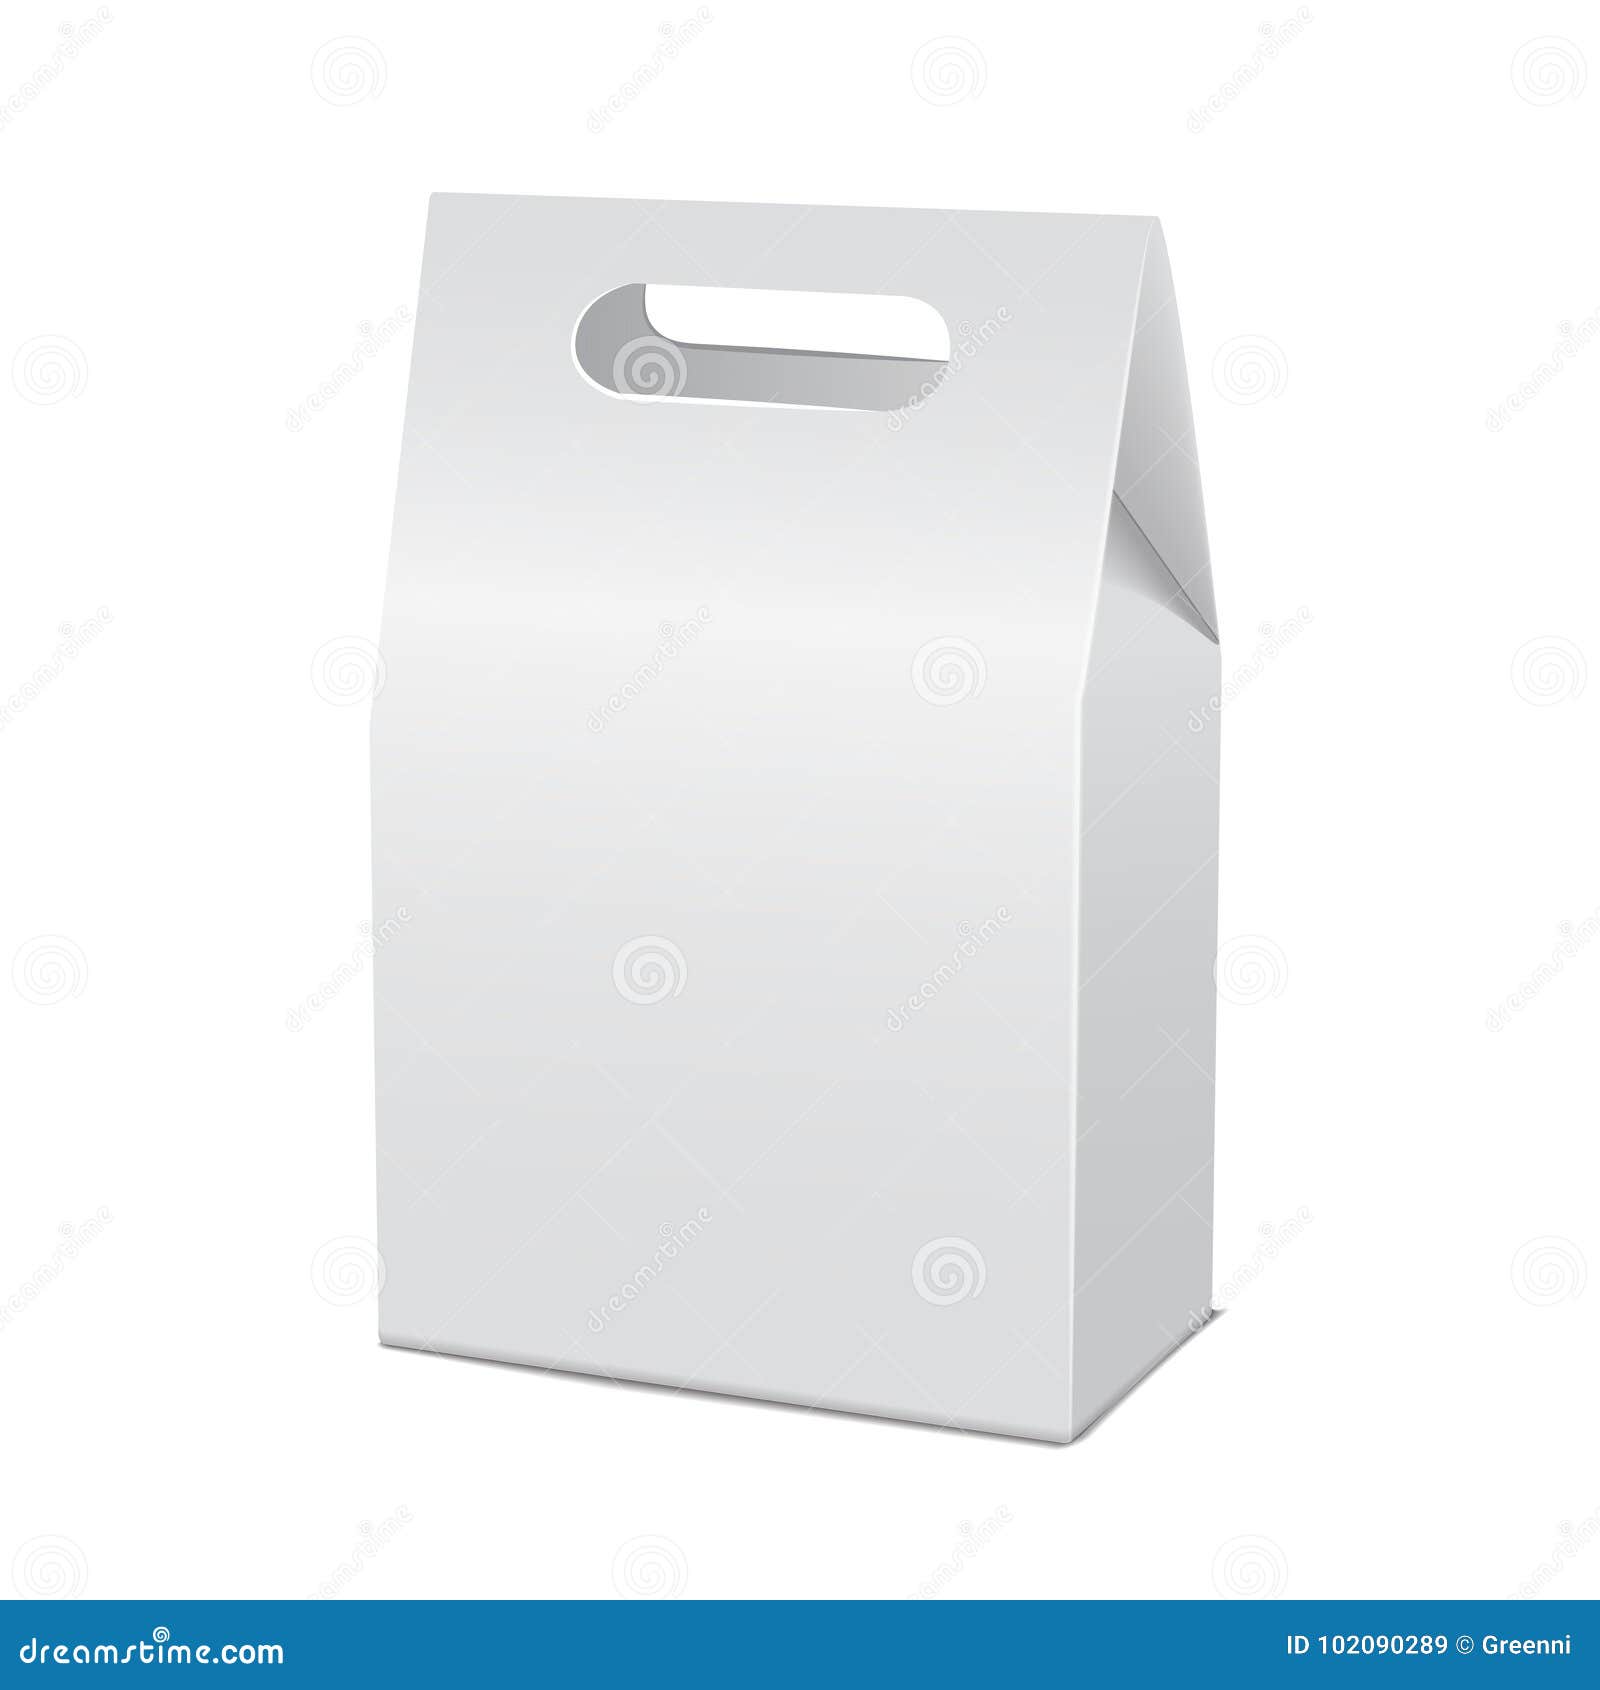 https://thumbs.dreamstime.com/z/realistic-white-d-model-cardboard-take-away-food-box-mock-up-realistic-white-d-model-cardboard-take-away-food-box-mock-up-empty-102090289.jpg